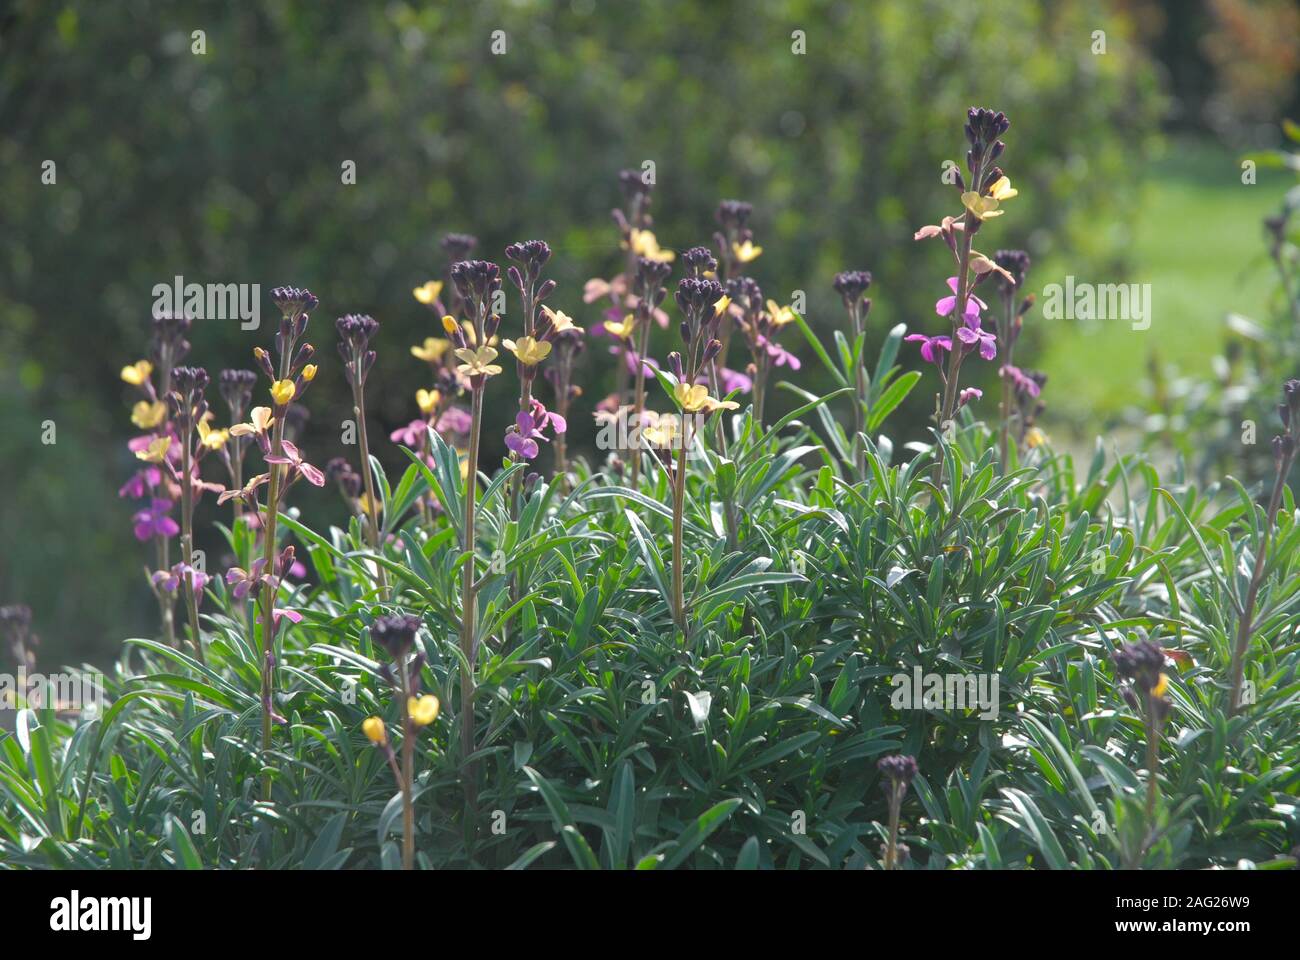 Erysimum mutabile, also known as Perennial wallflower, growing in a garden Stock Photo